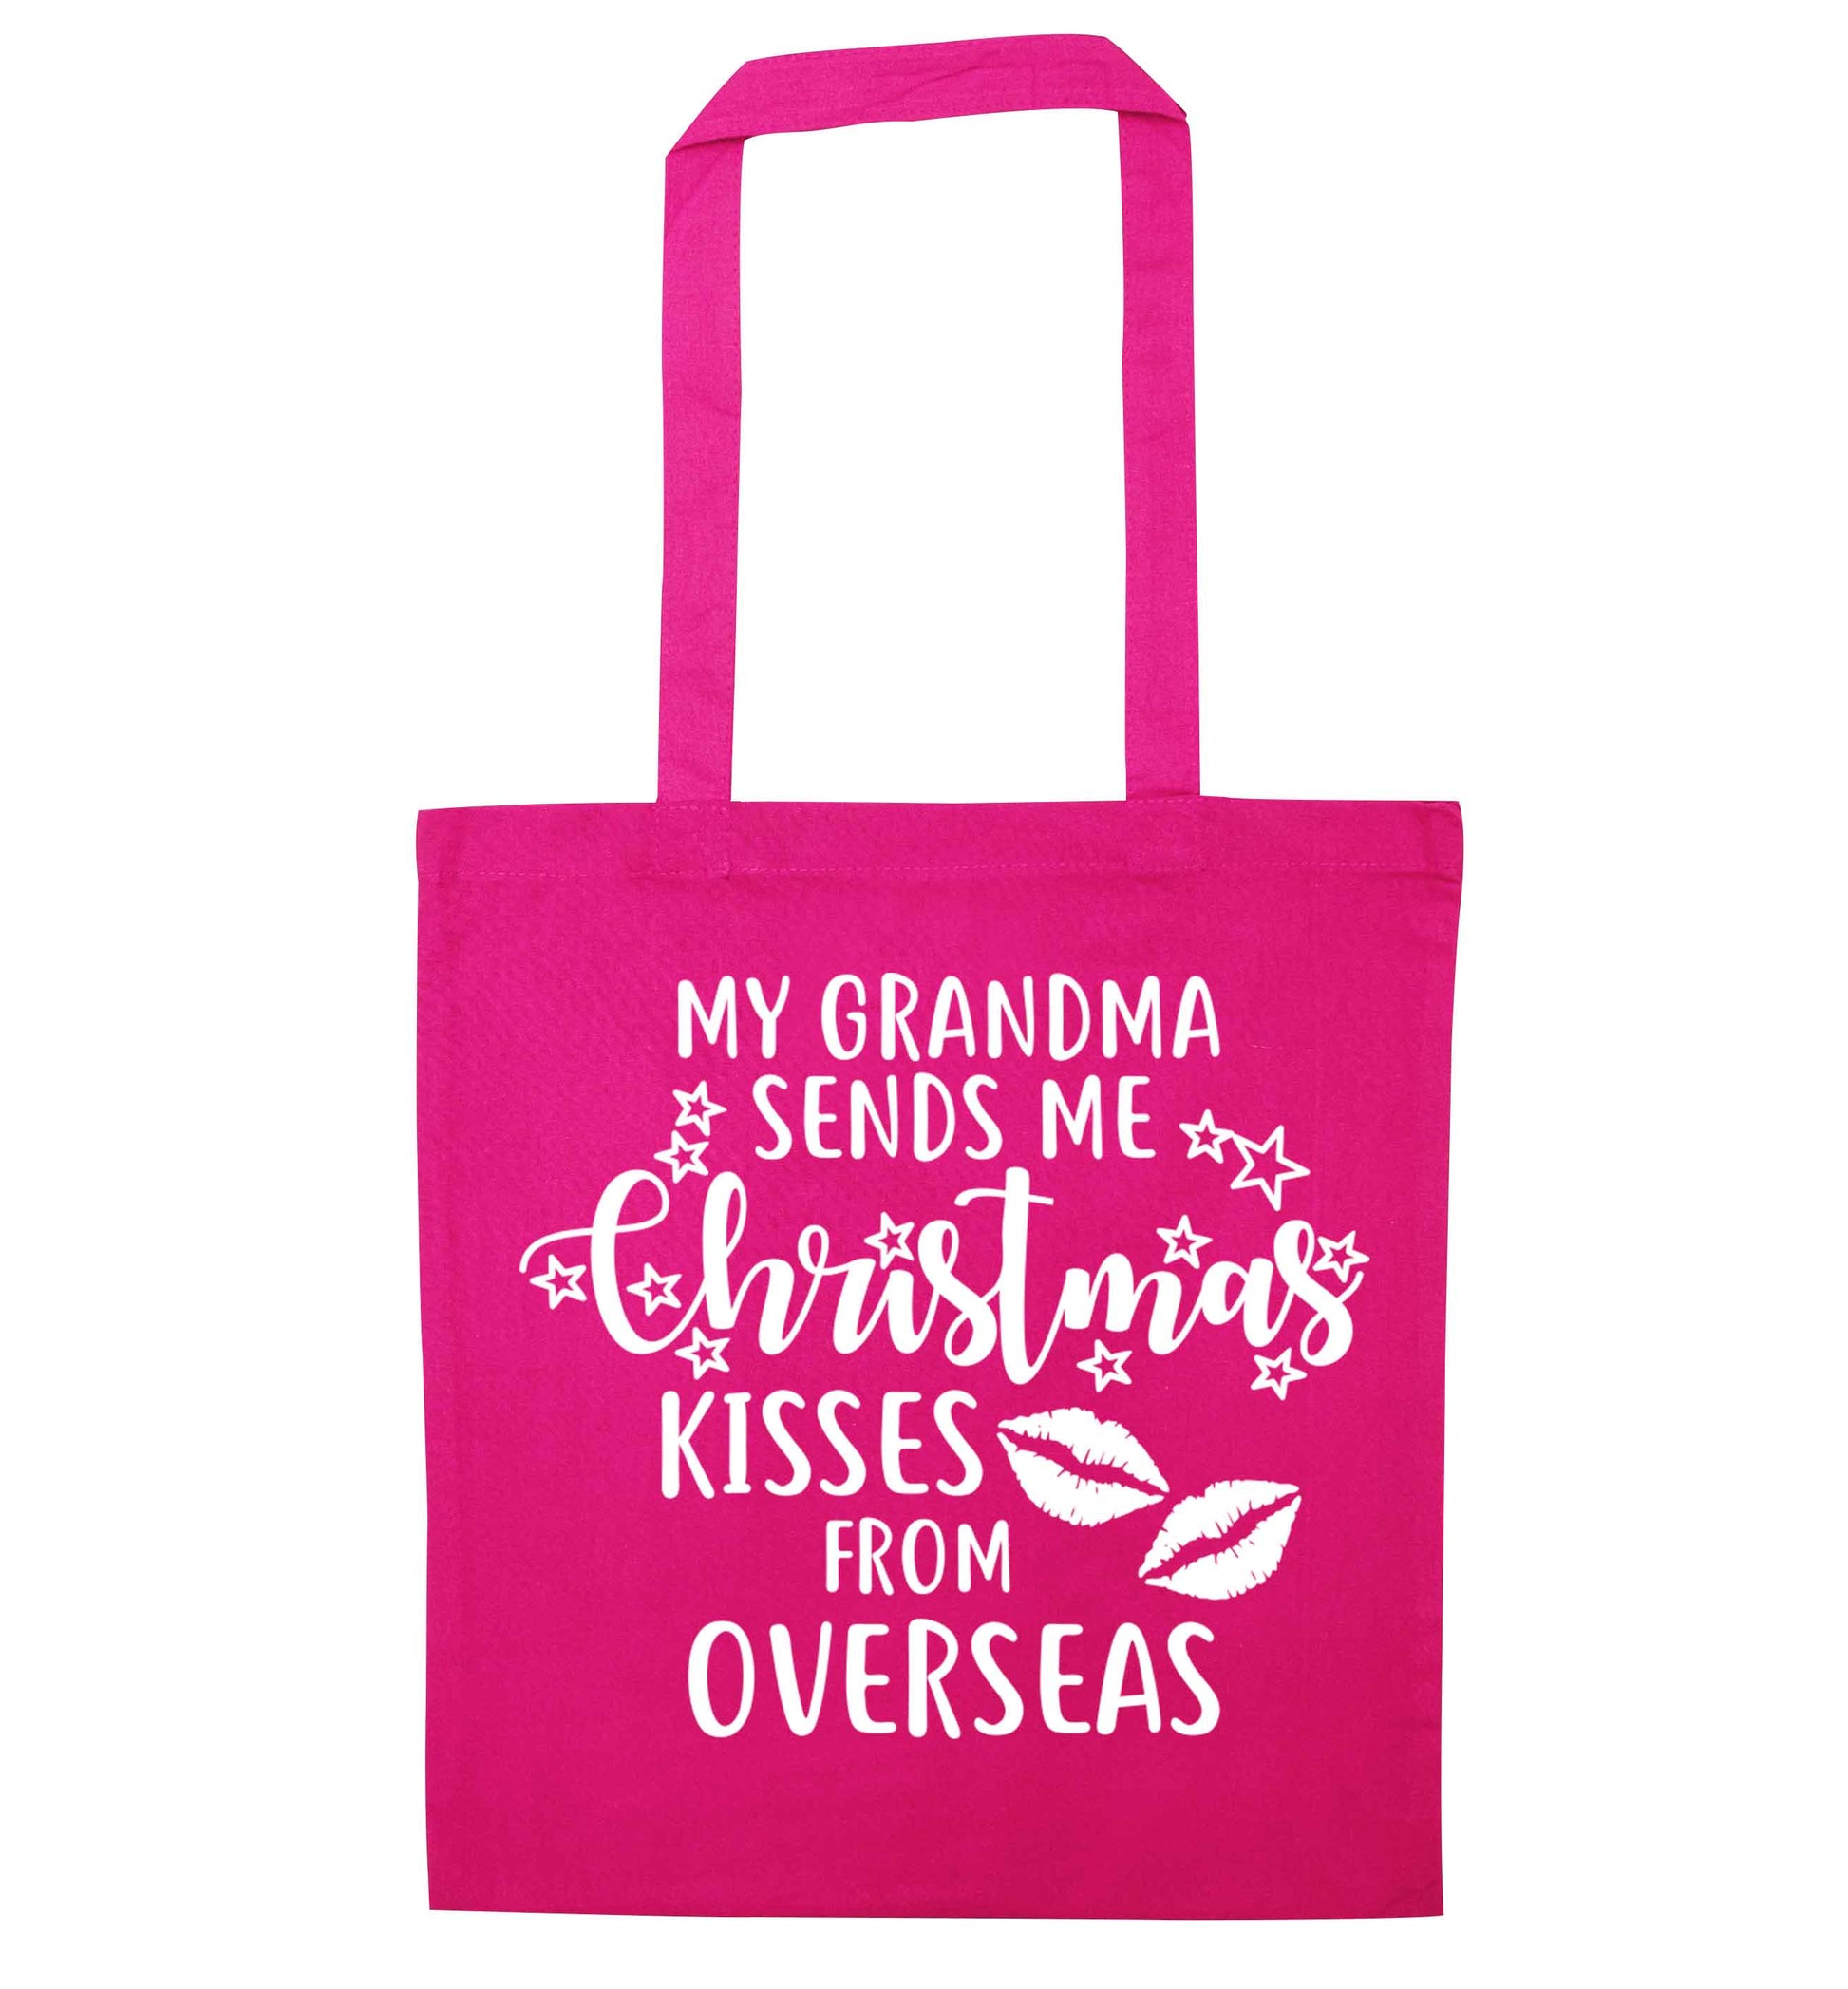 Grandma Christmas Kisses Overseas pink tote bag